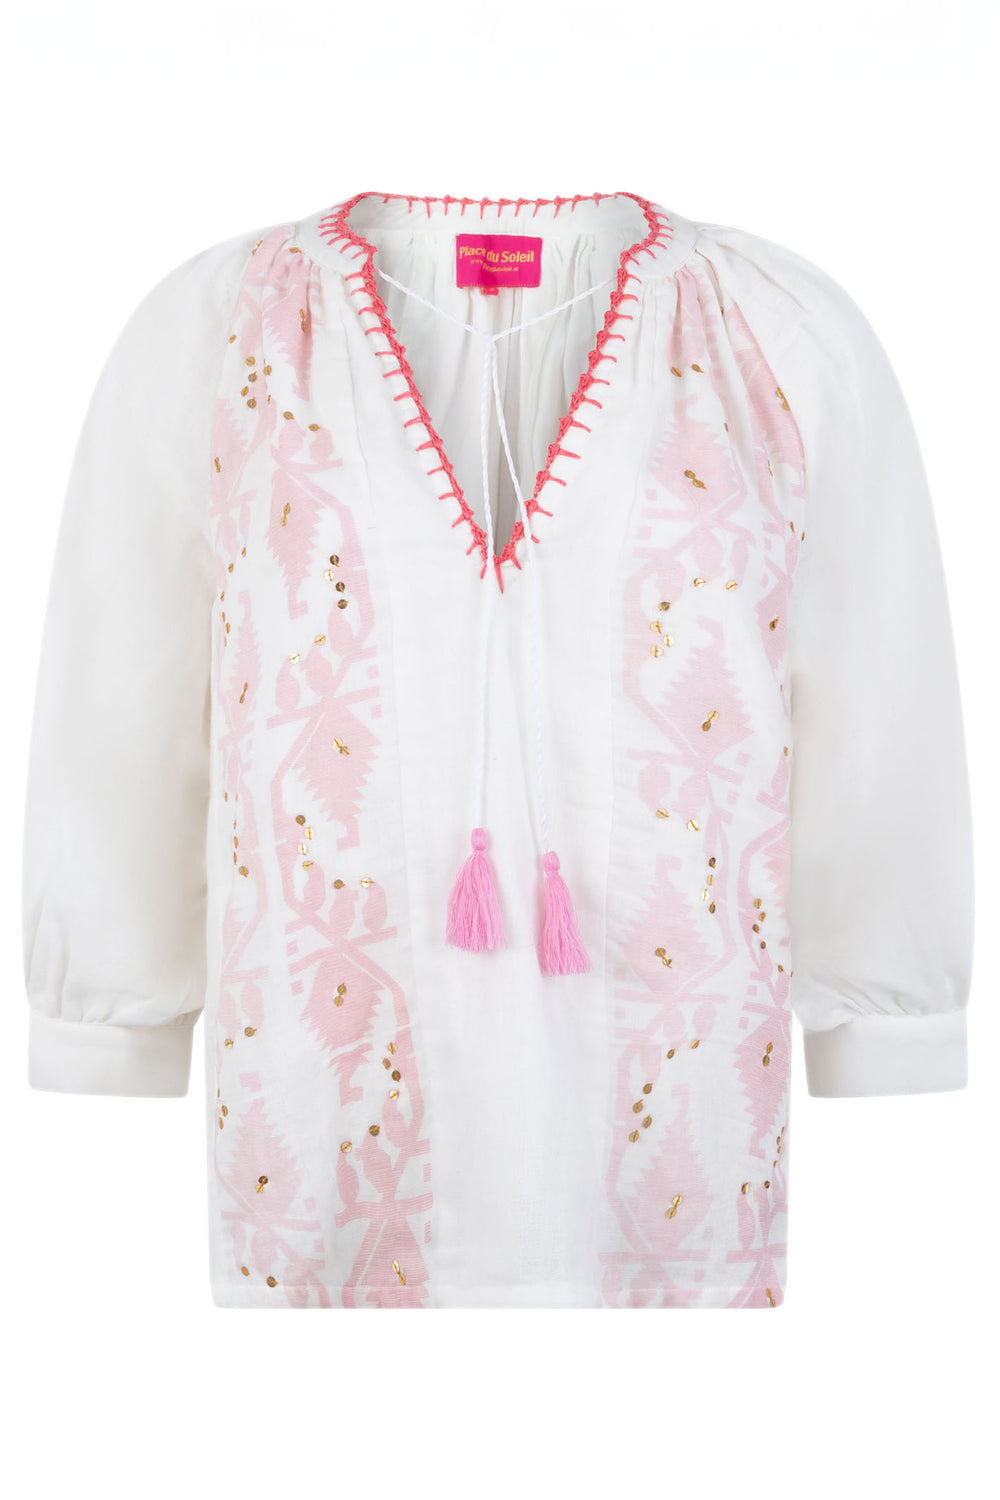 Place du Soleil S24 307 White Pink Ikat Print Blouse - Olivia Grace Fashion